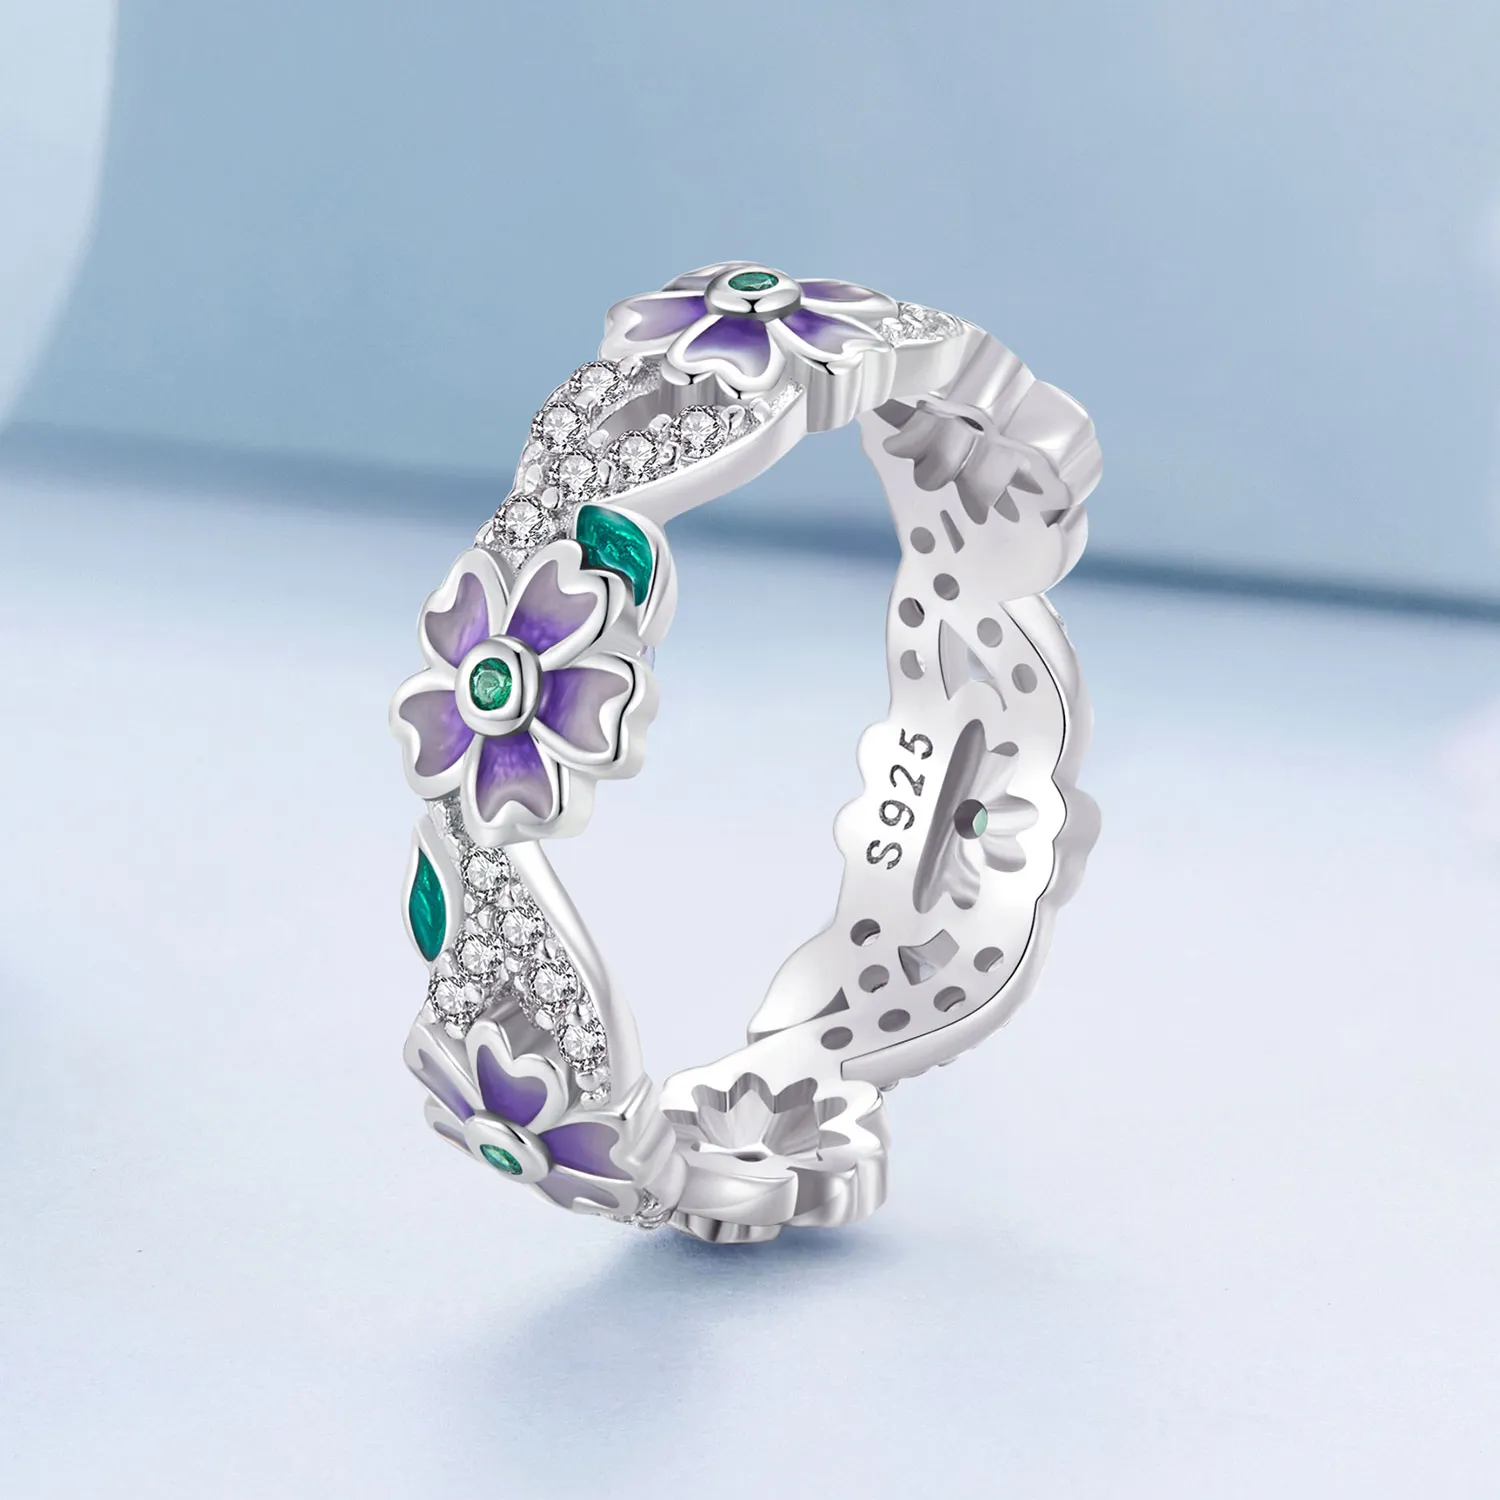 Pandora Style Purple Garland Ring - BSR492